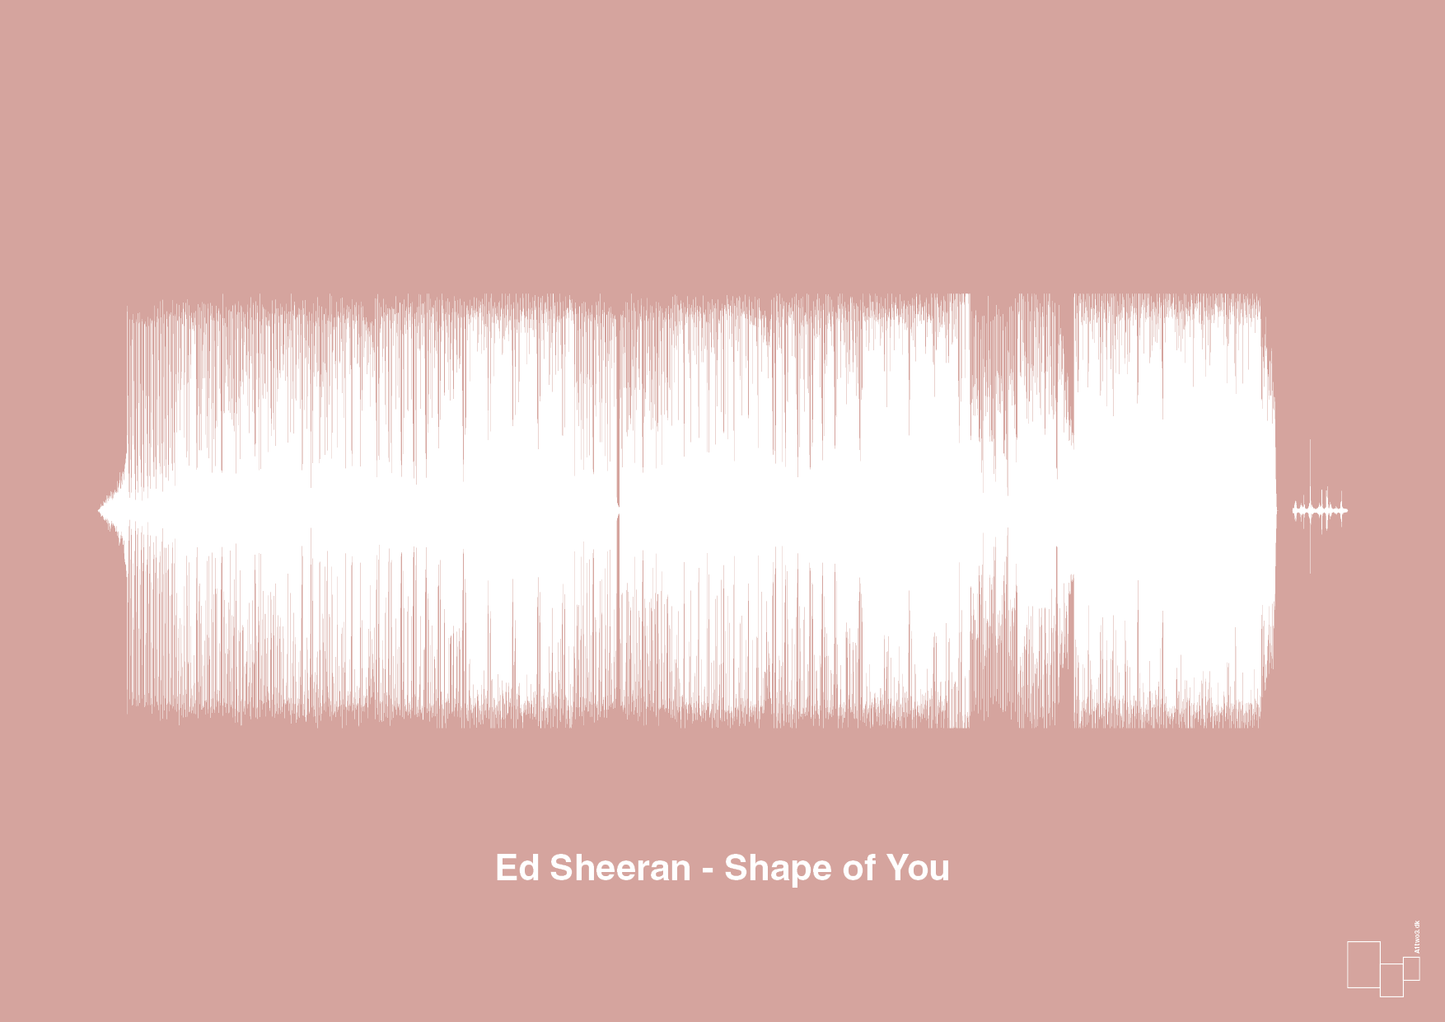 ed sheeran - shape of you - Plakat med Musik i Bubble Shell